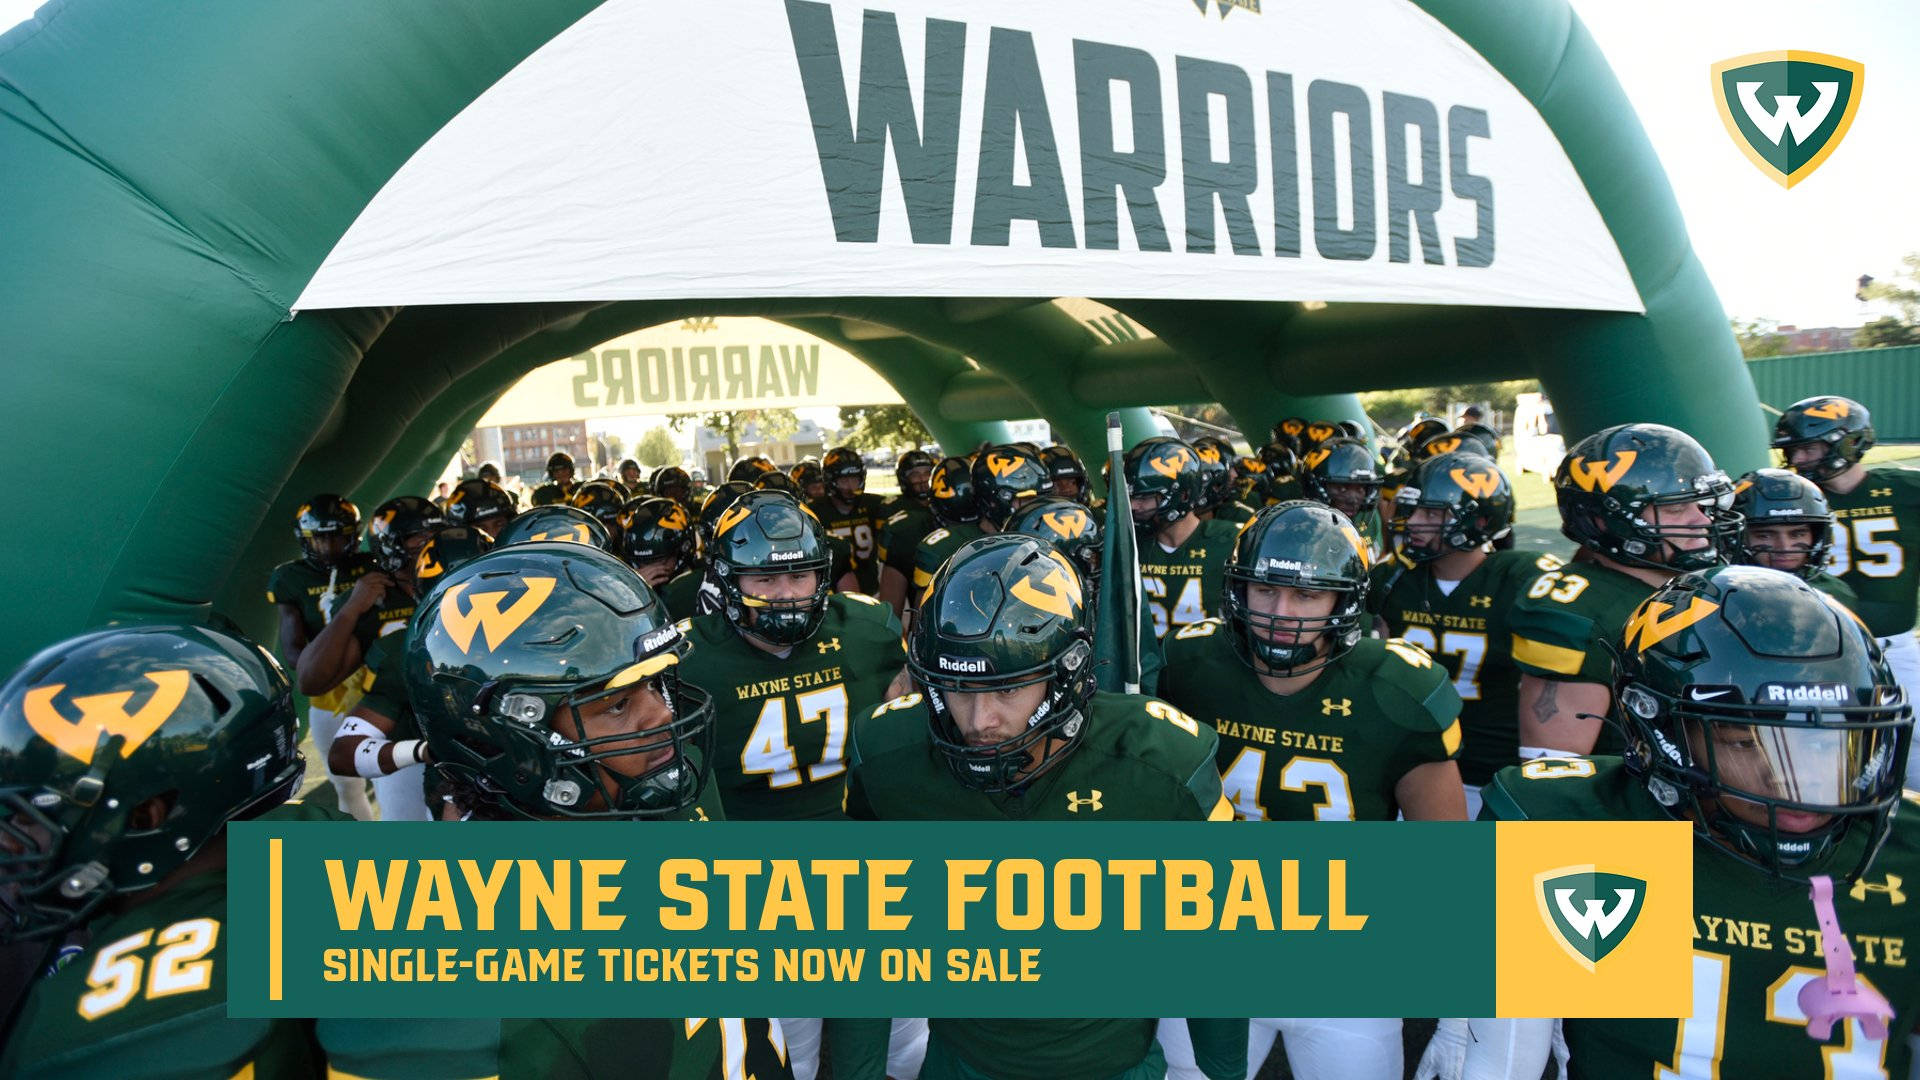 Wayne State University Football Team Poster Wallpaper